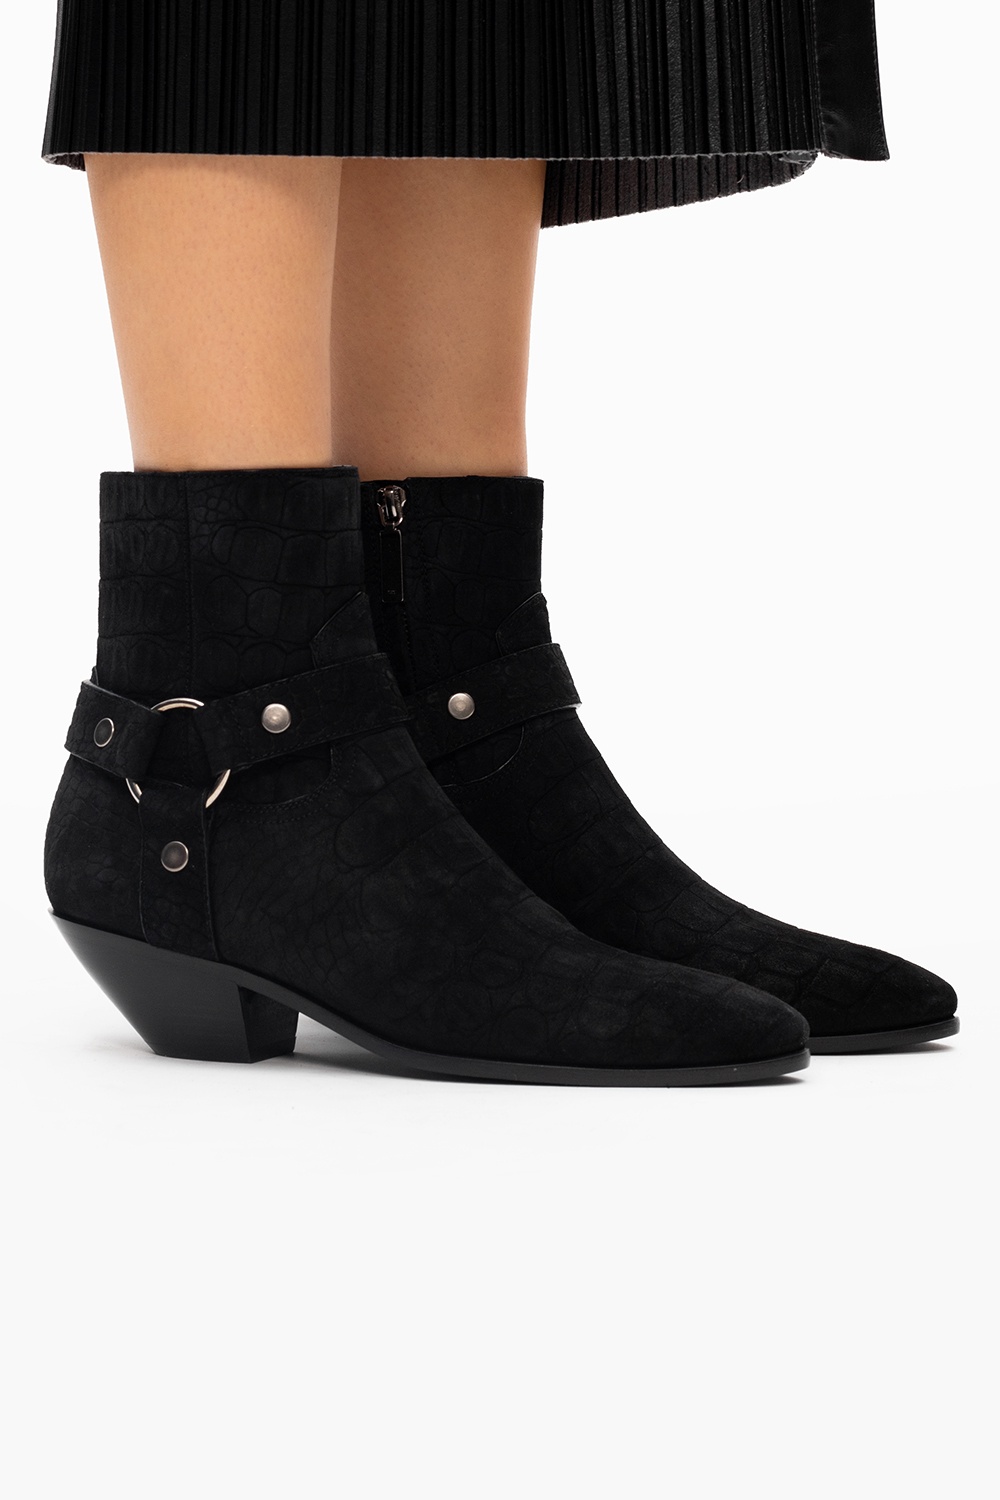 Saint Laurent ‘West’ suede heeled ankle boots